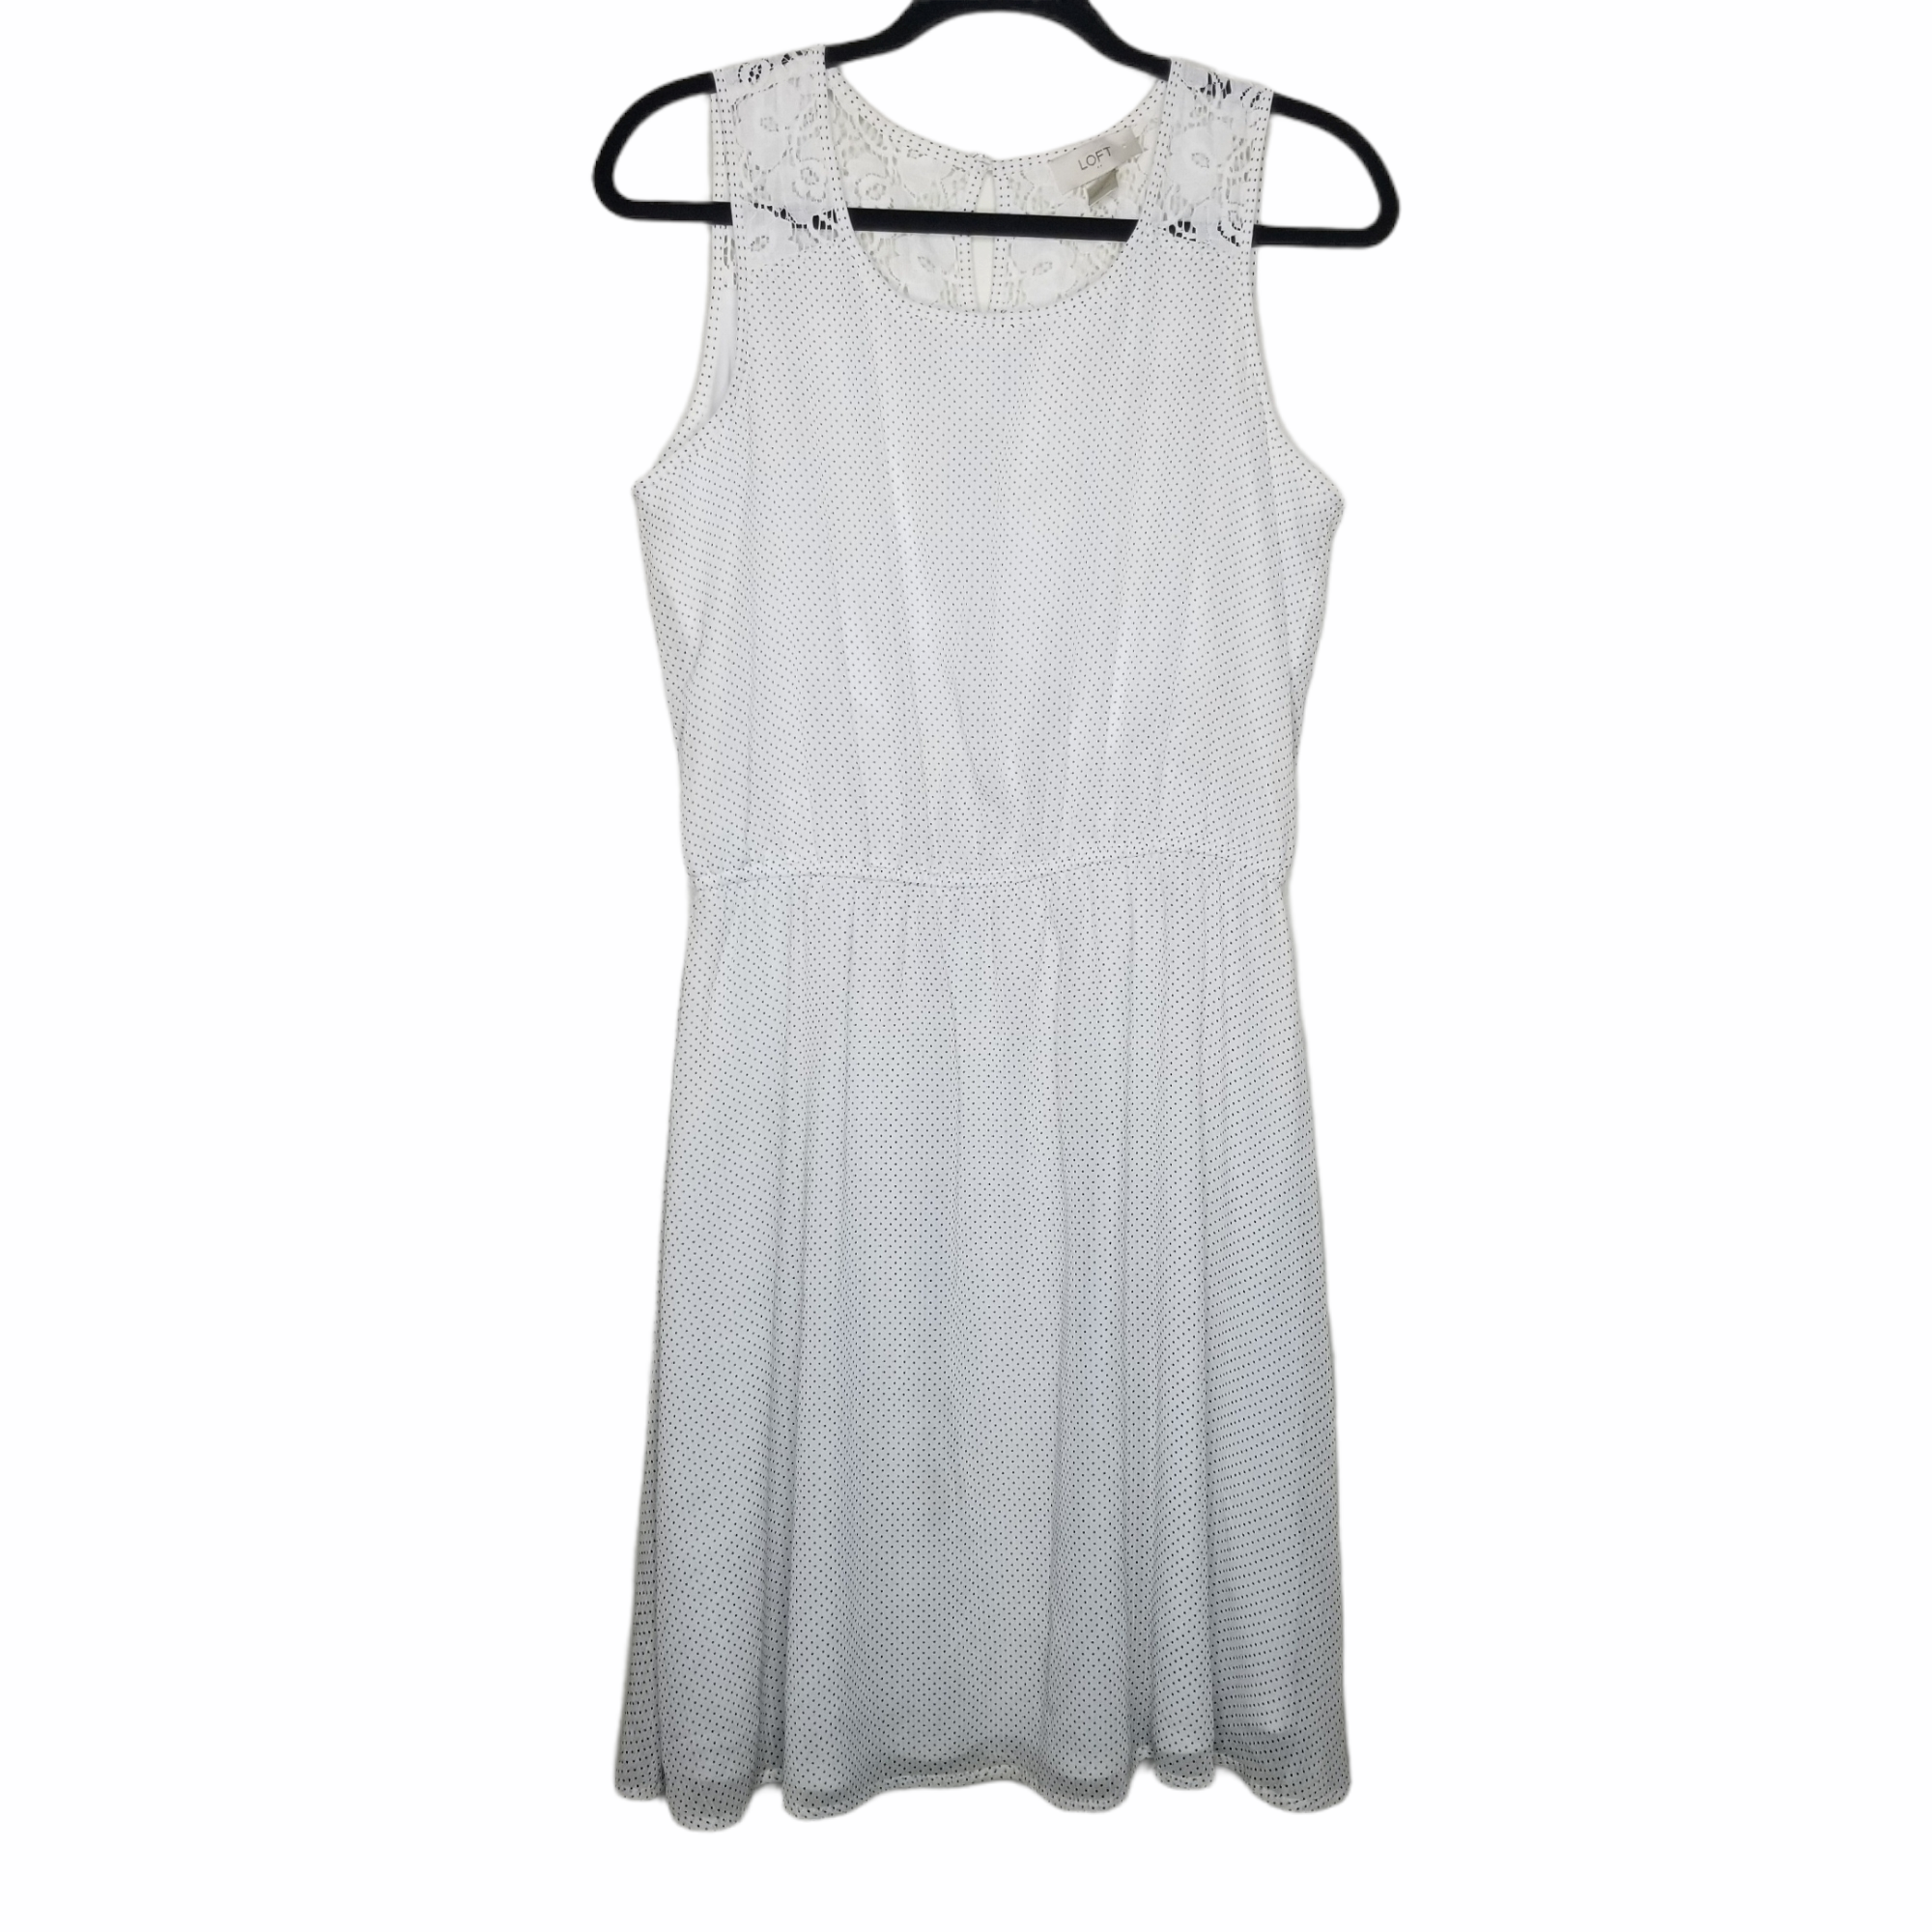 Ann Taylor LOFT Cream Gray Polka Dots Sleeveless Dress Size 6